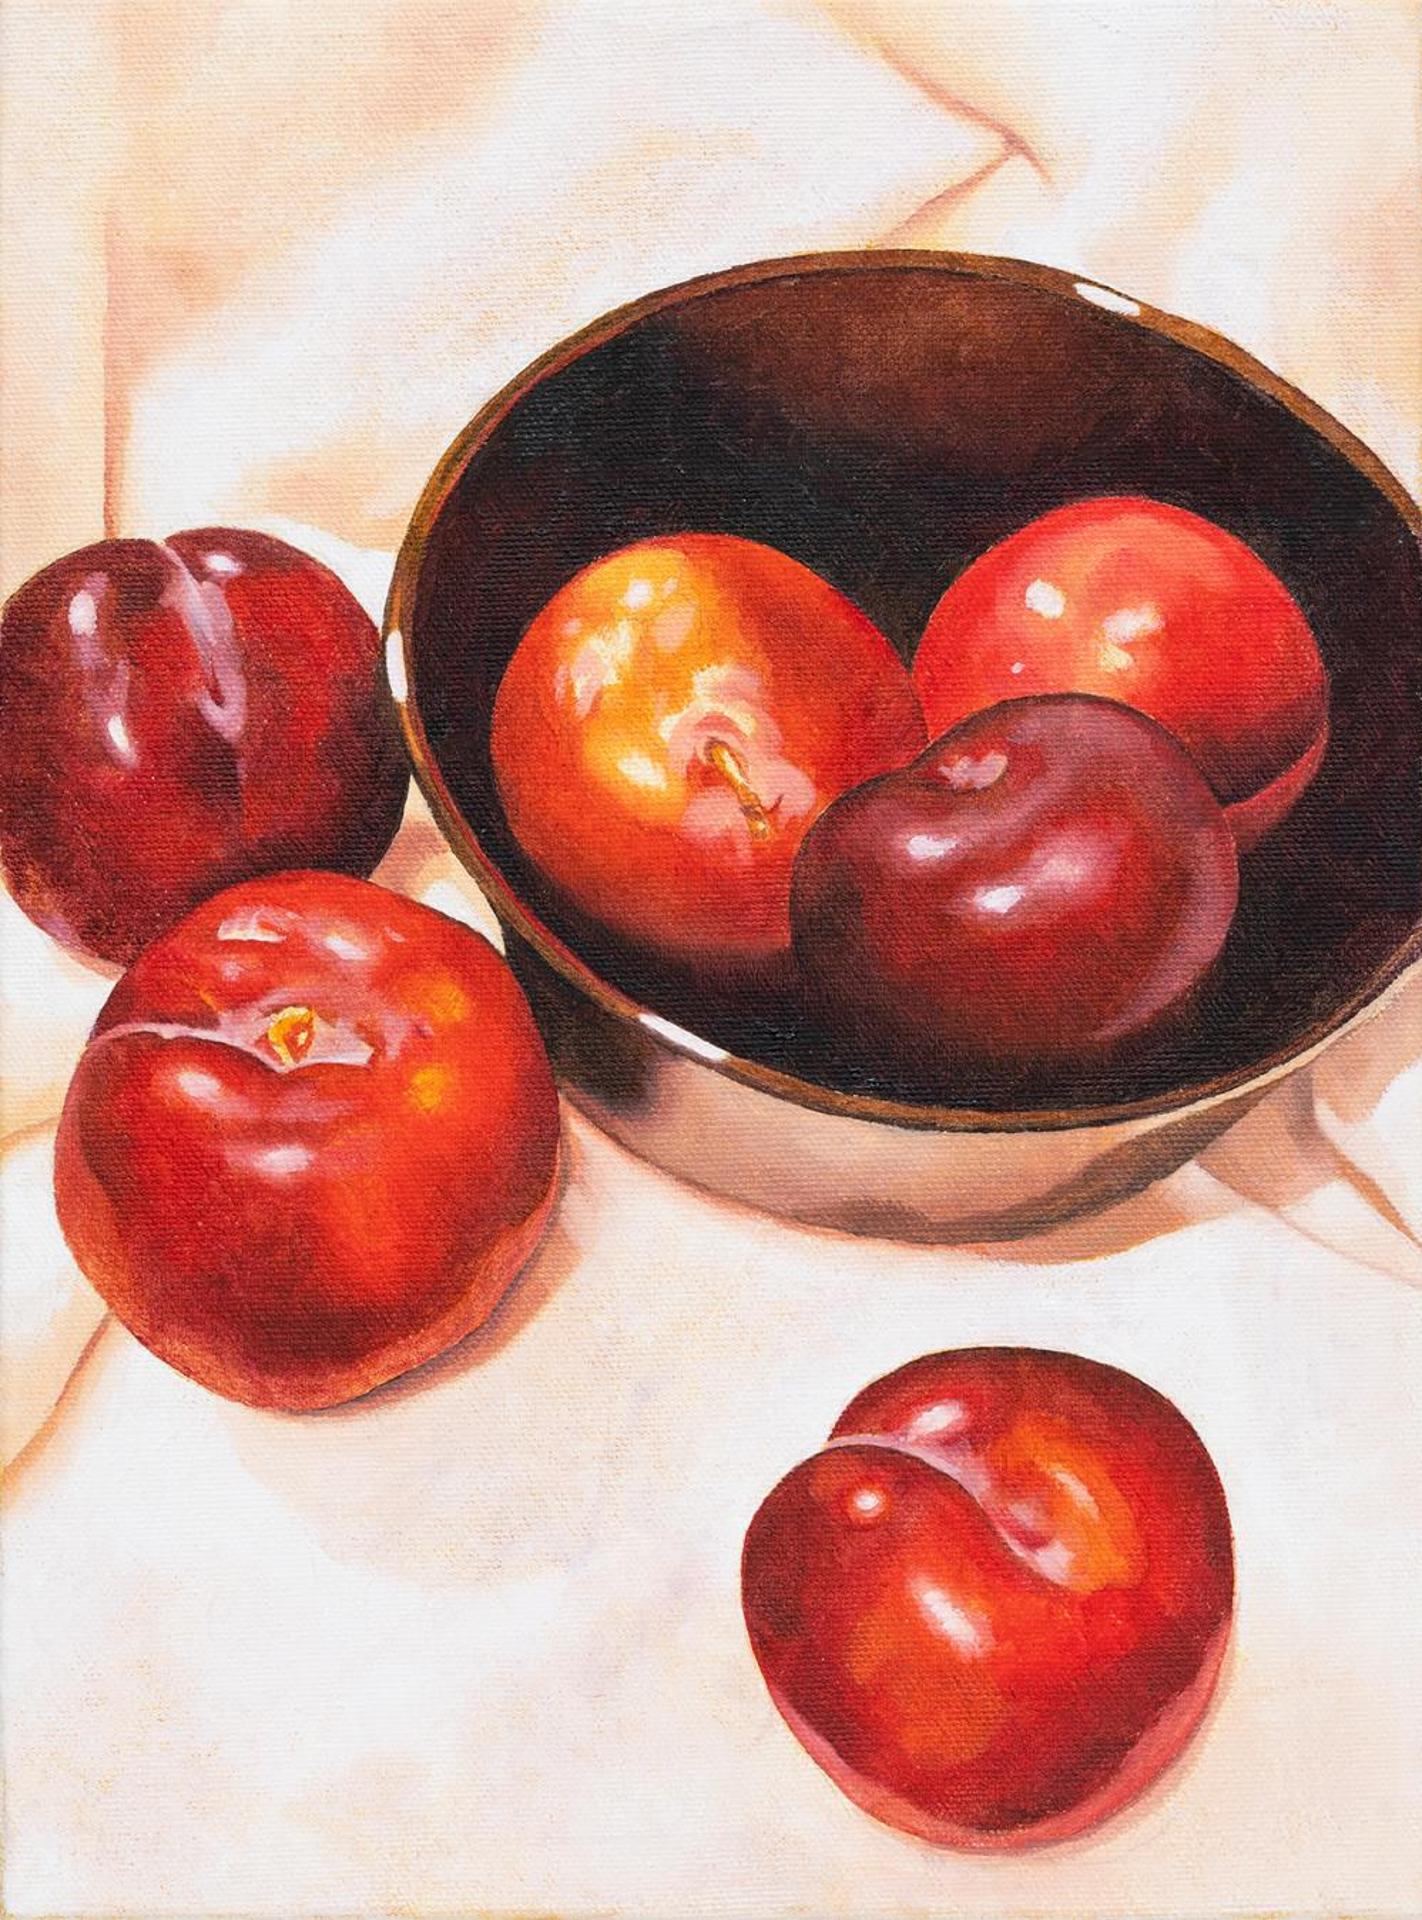 Jeff Spokes - Untitled - Bowl of Fruit